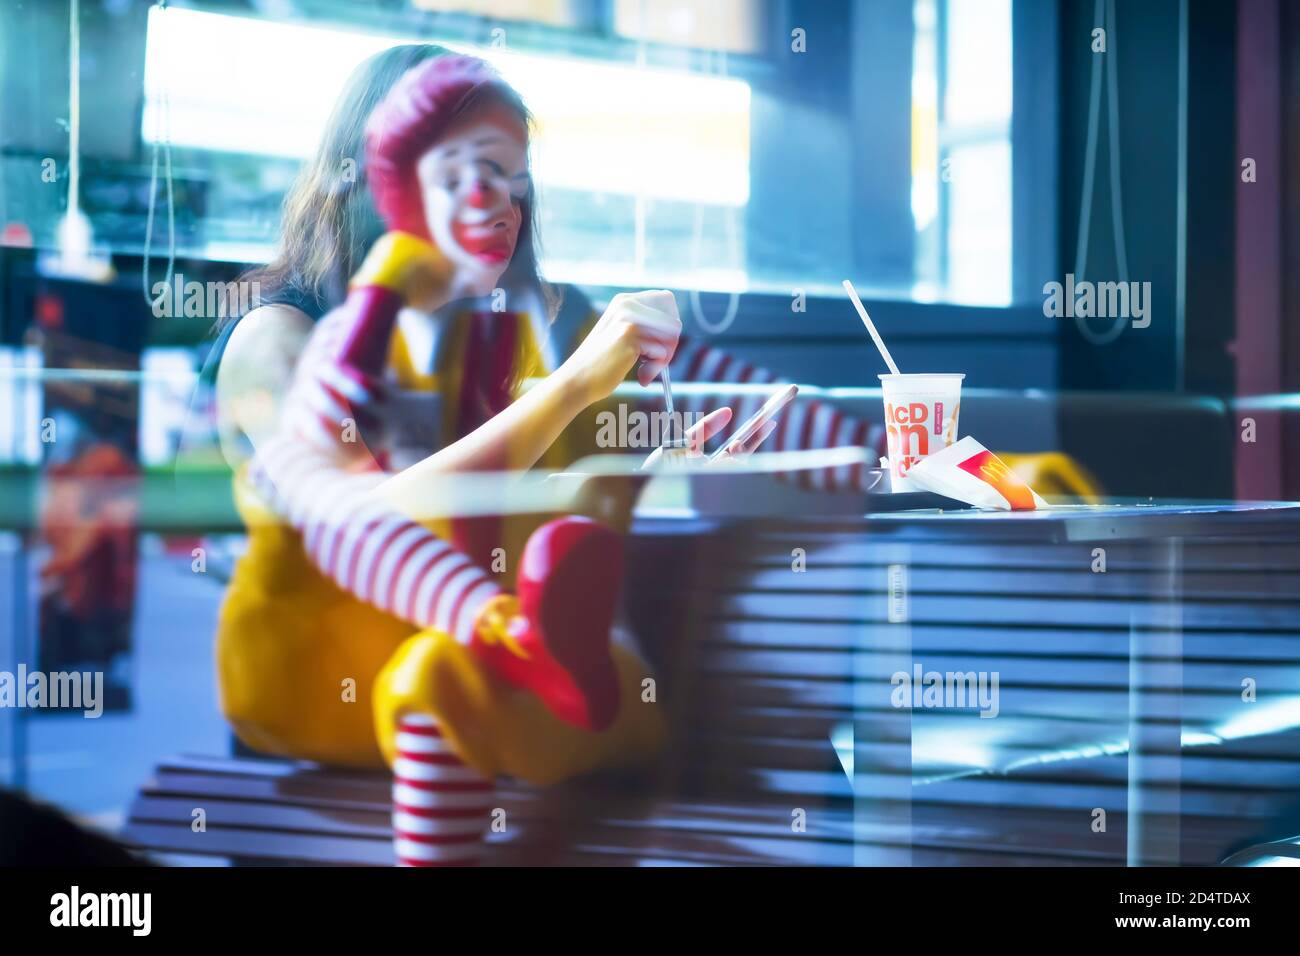 Bangkok, Thailand - JULY 9, 2019: A Ronald McDonald statue and Asian woman reflection on the mirror of the McDonald’s fast-food restaurant. Bangkok. Stock Photo